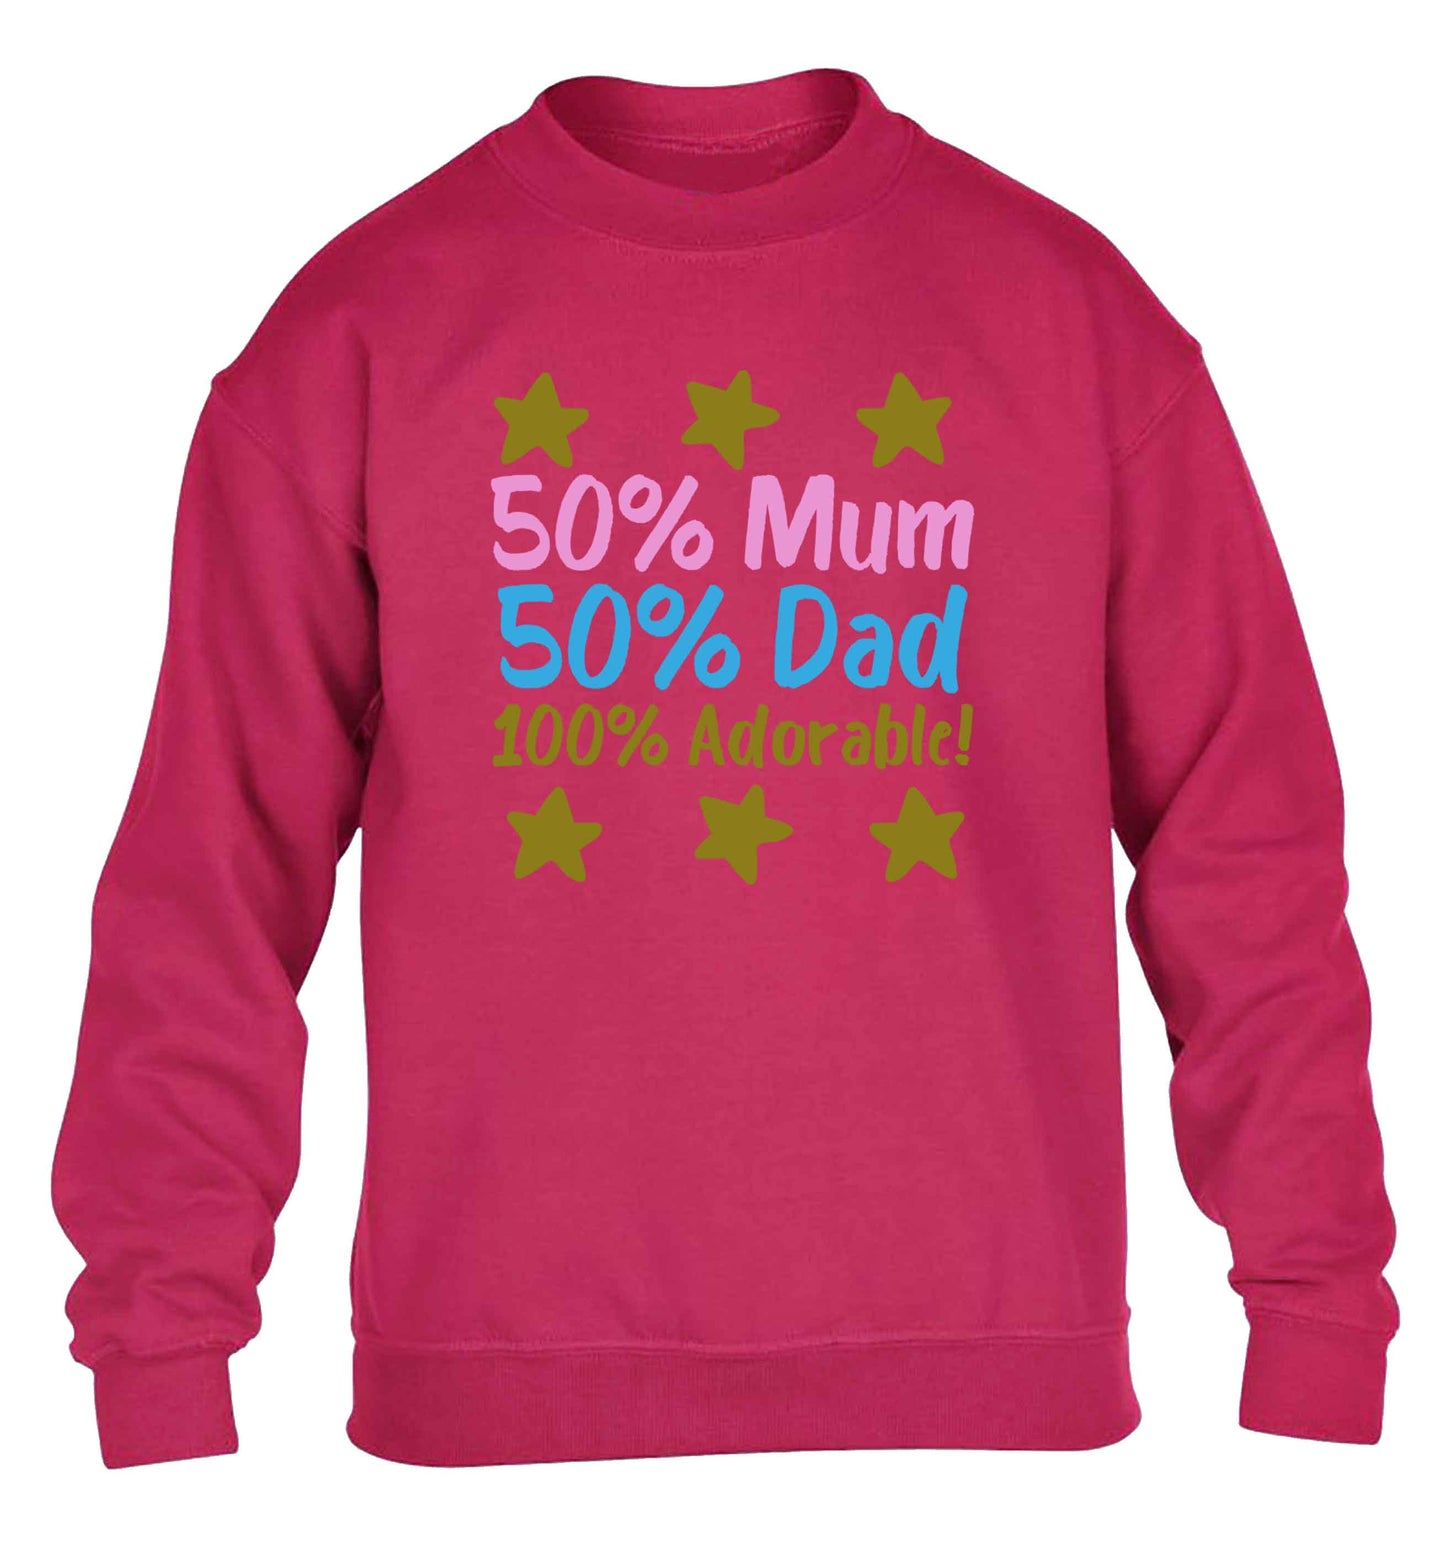 50% mum 50% dad 100% adorable children's pink sweater 12-13 Years